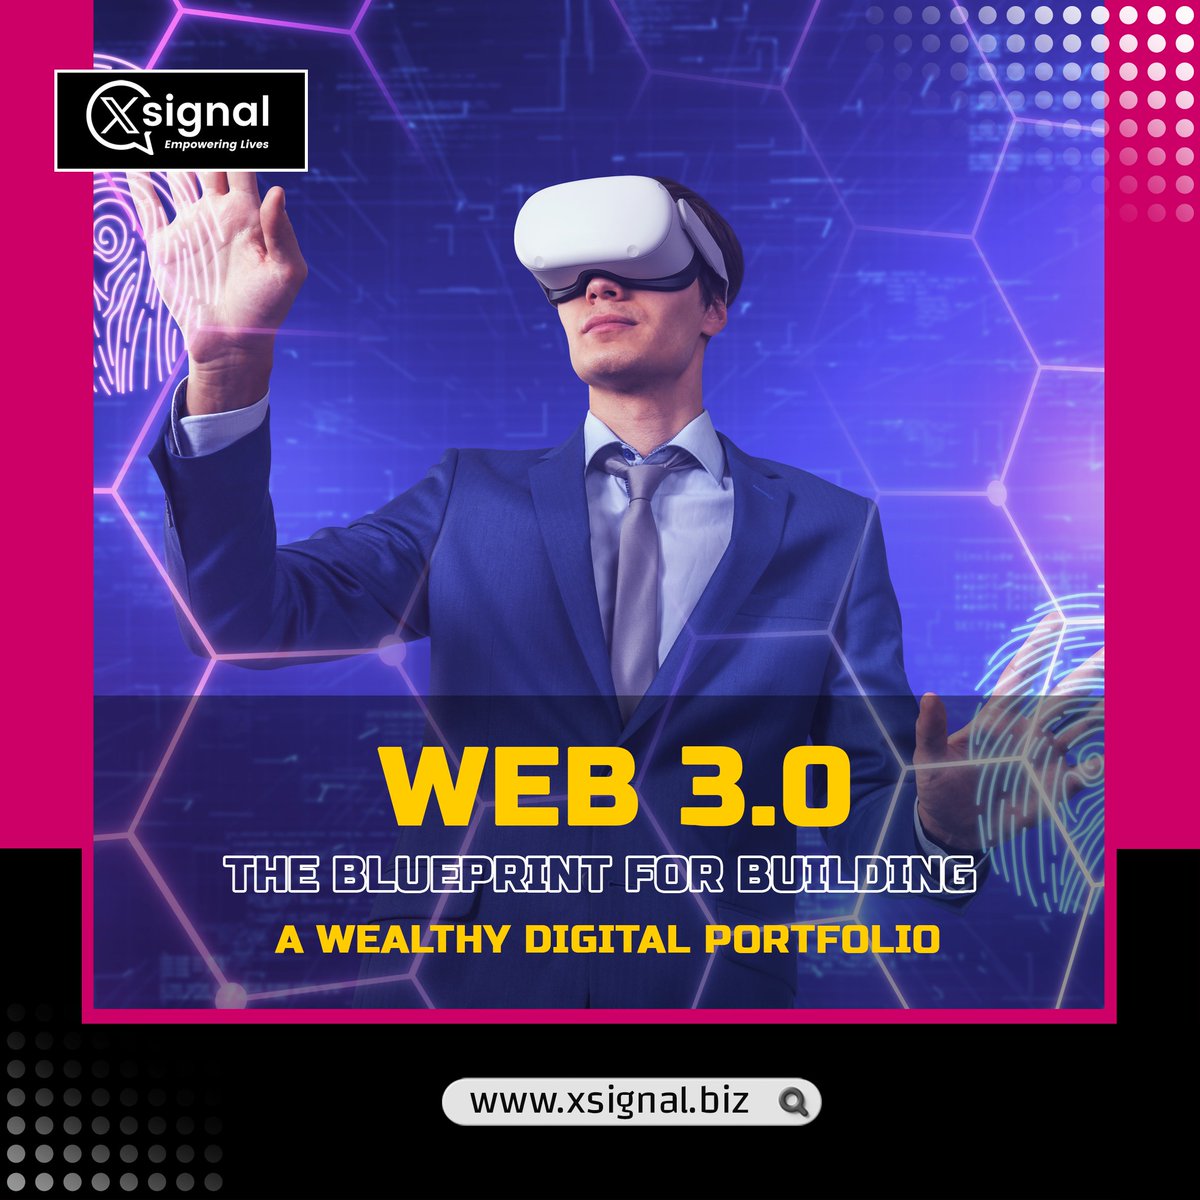 Web 3.0: The Blueprint for Building a Wealthy Digital Portfolio #Xsignal #Growth #DigitalRevolution #web3 #NewFrontier #tech #opportunity #success